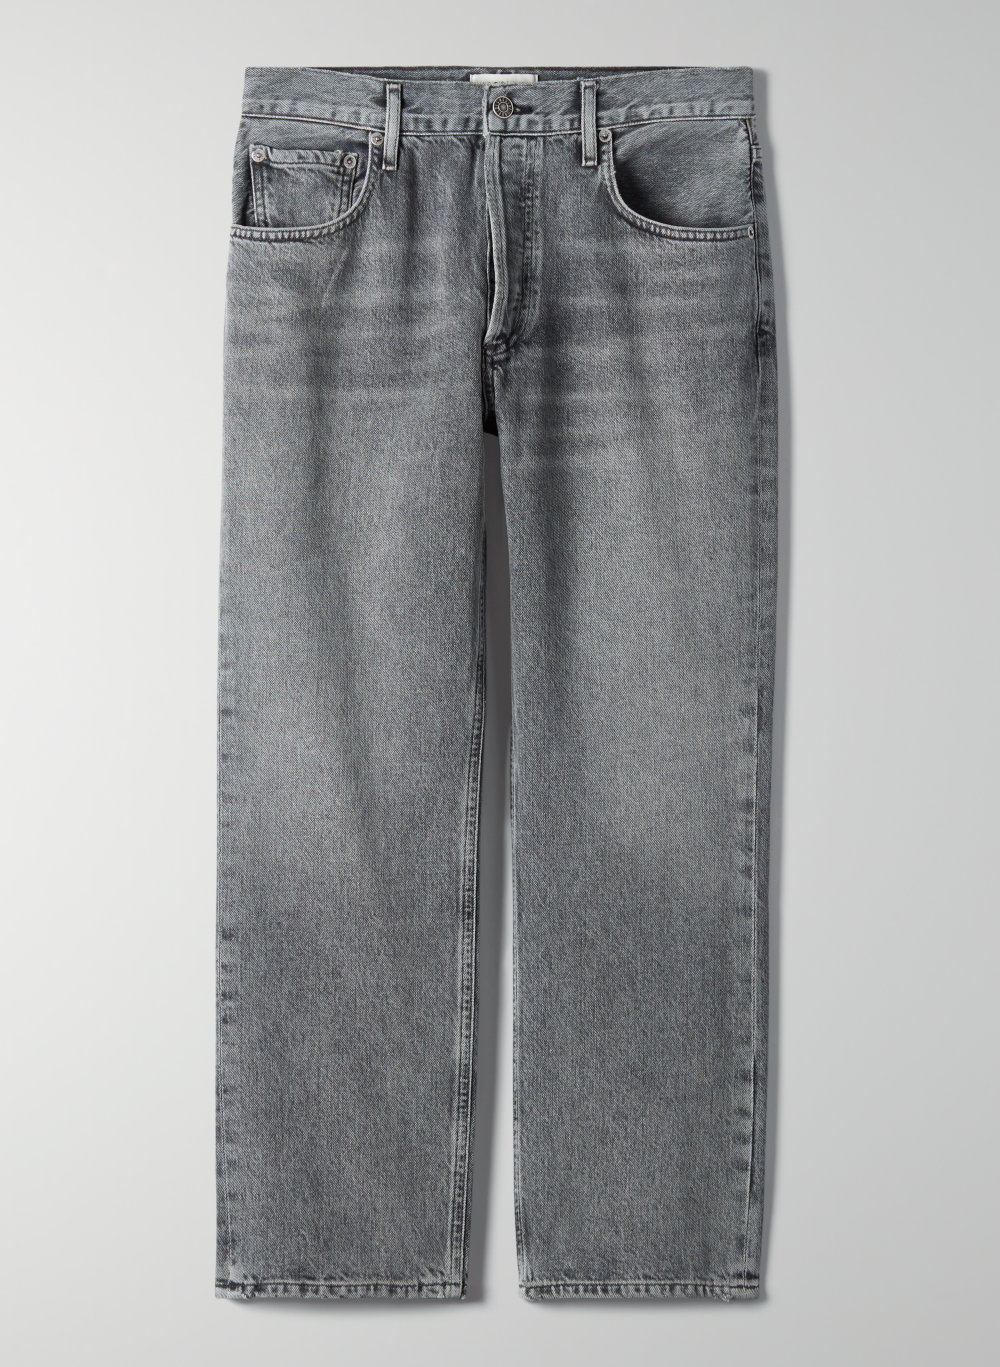 straight leg grey jeans